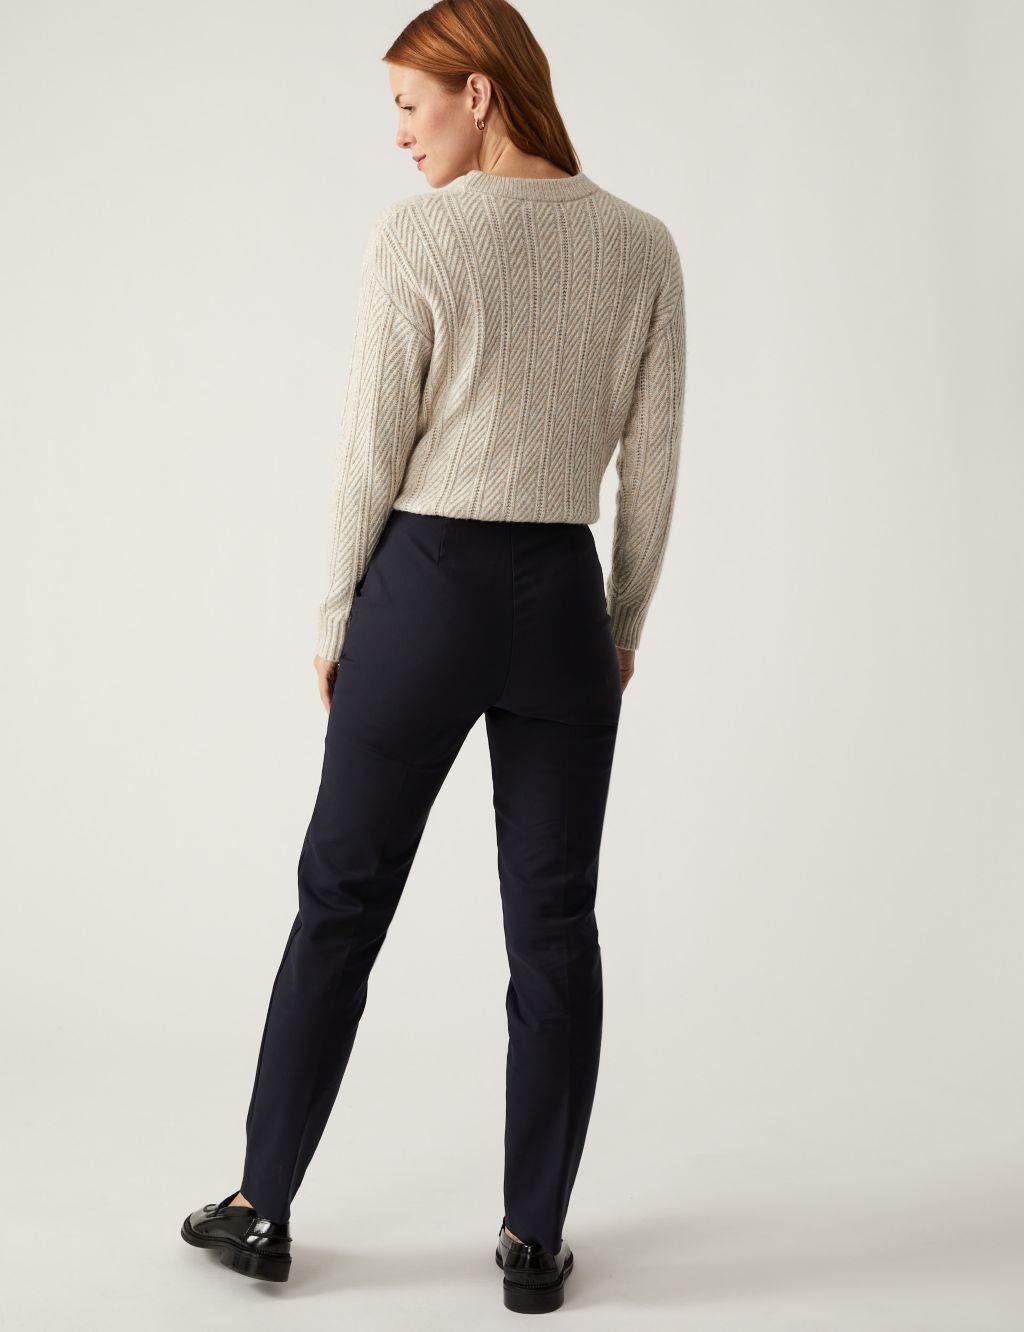 Cotton Blend Slim Fit Ankle Grazer Trousers image 5